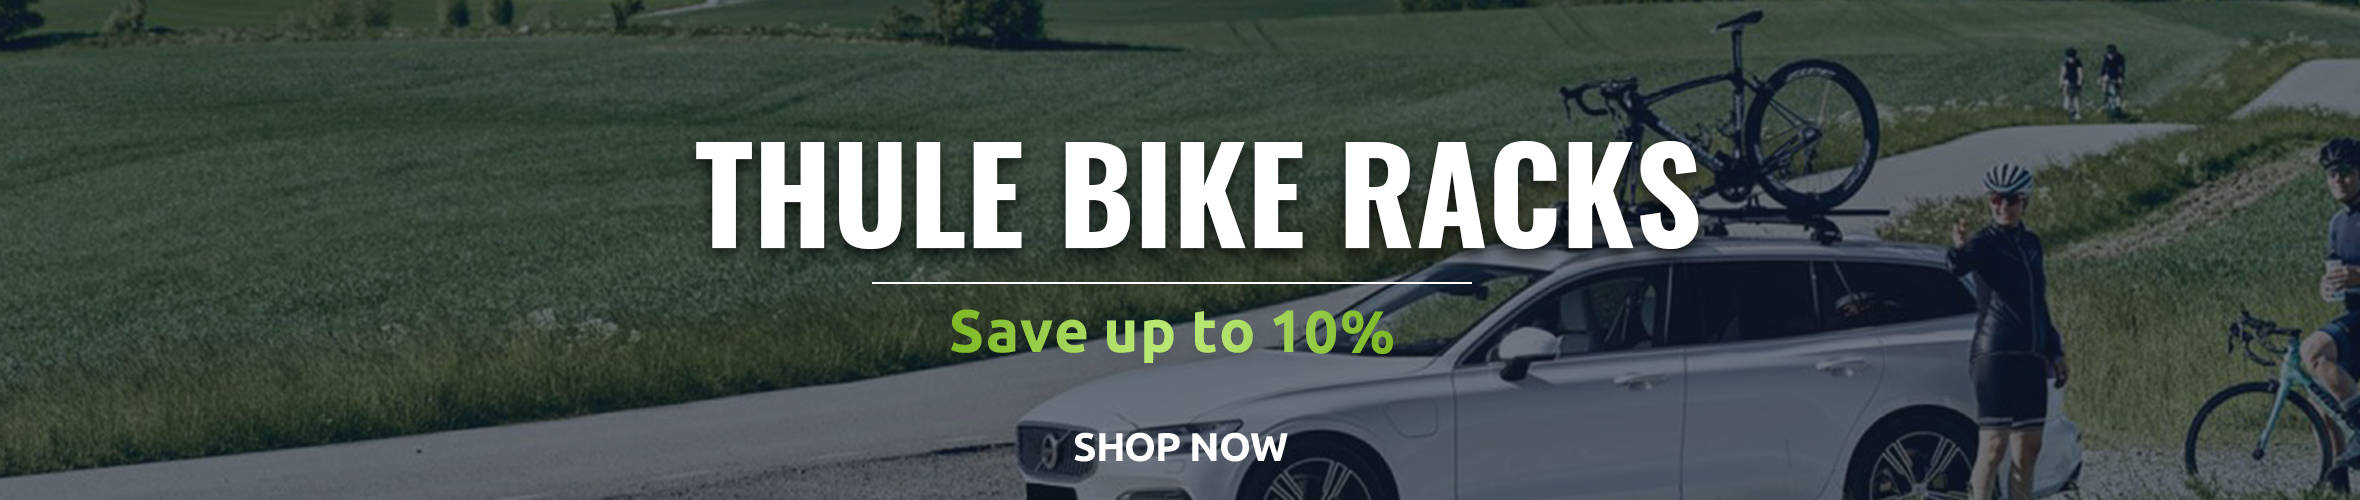 Thule Bike Racks - Save up to 10%